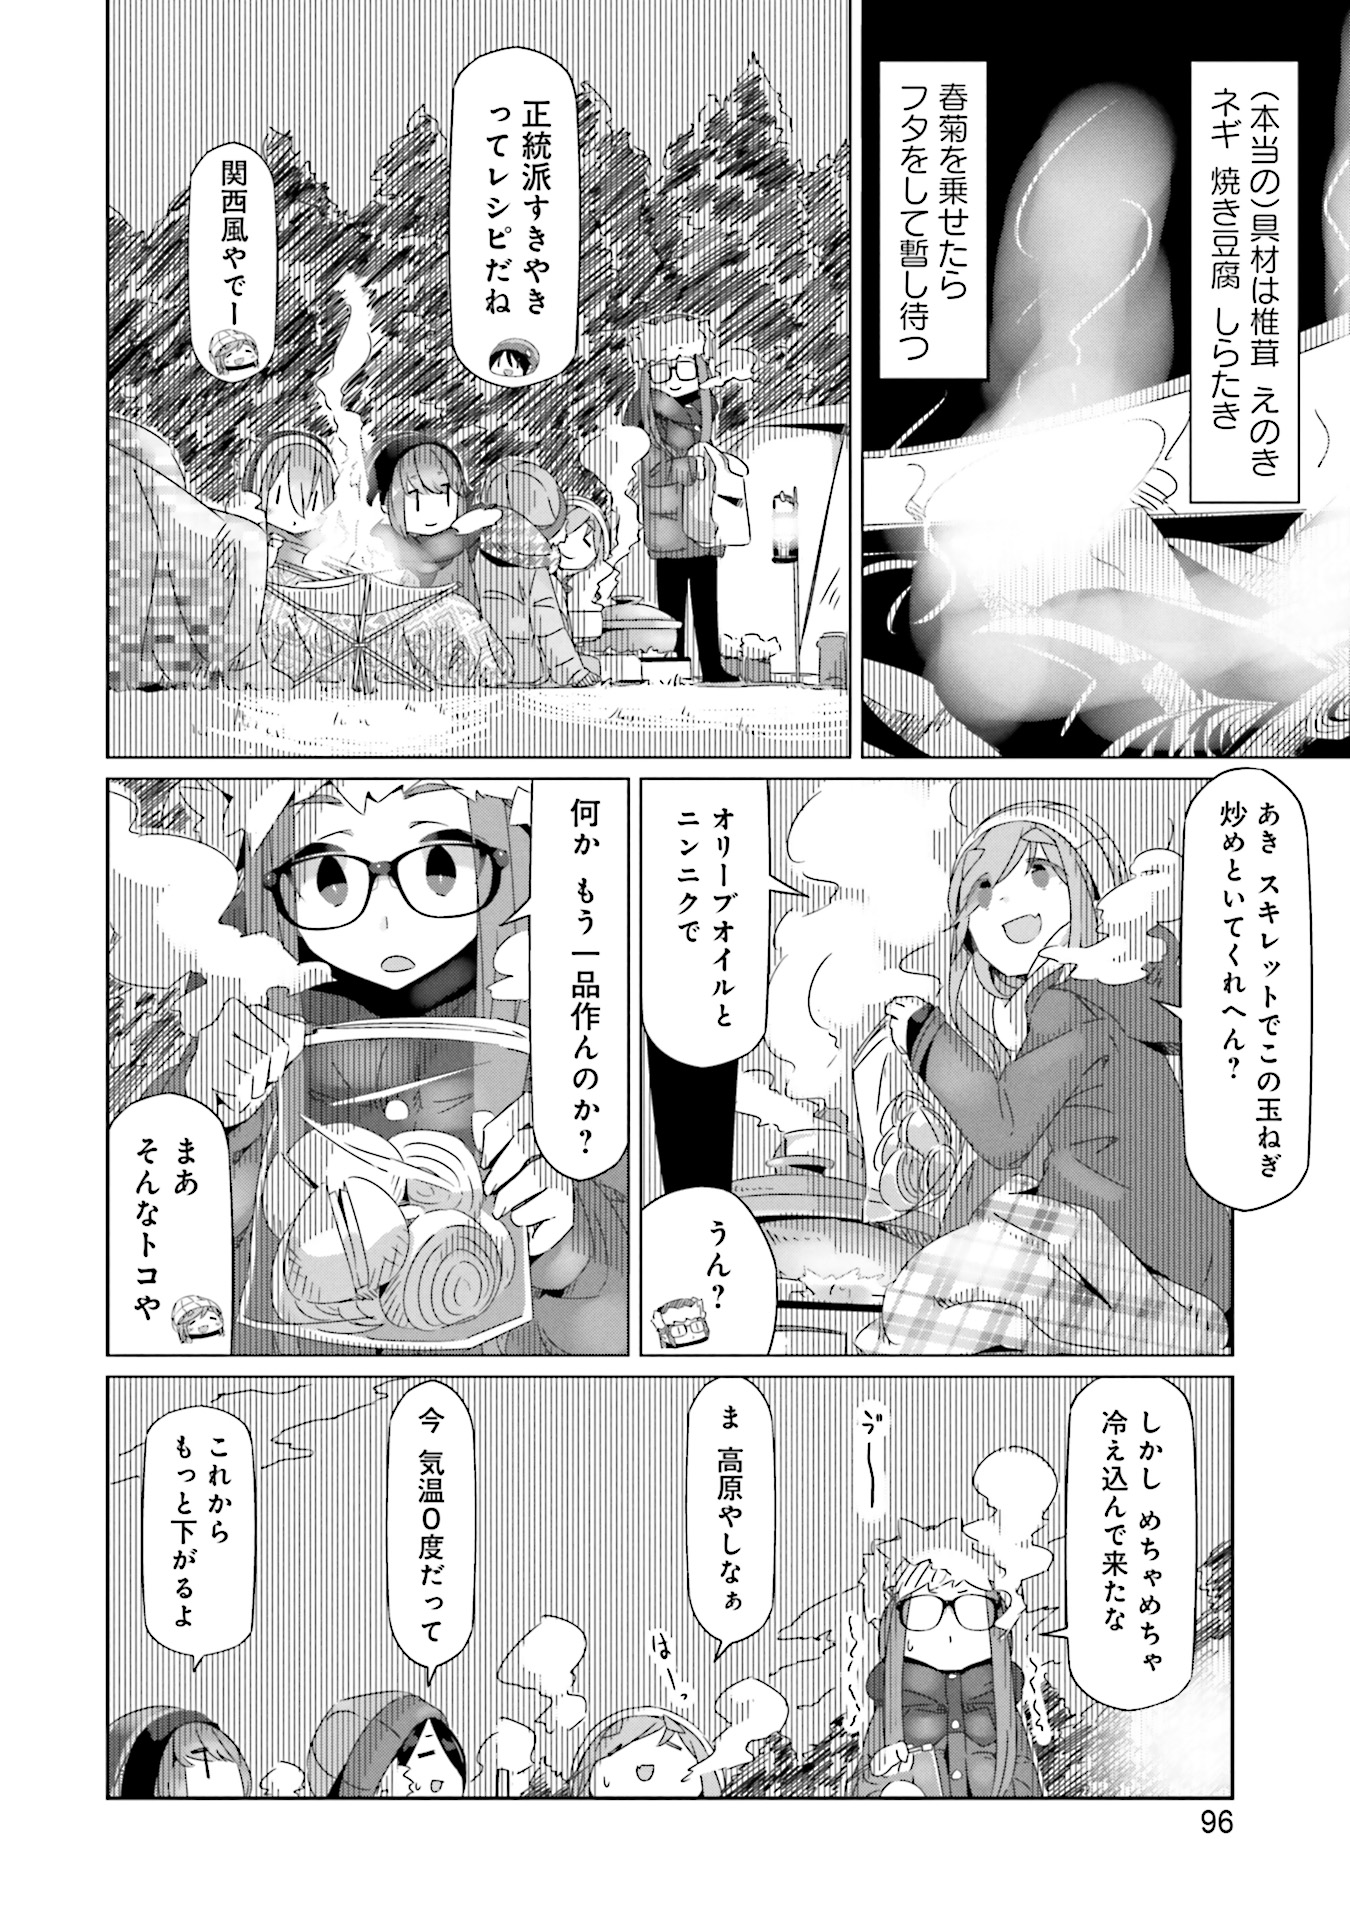 Yuru Camp - Chapter 22 - Page 4